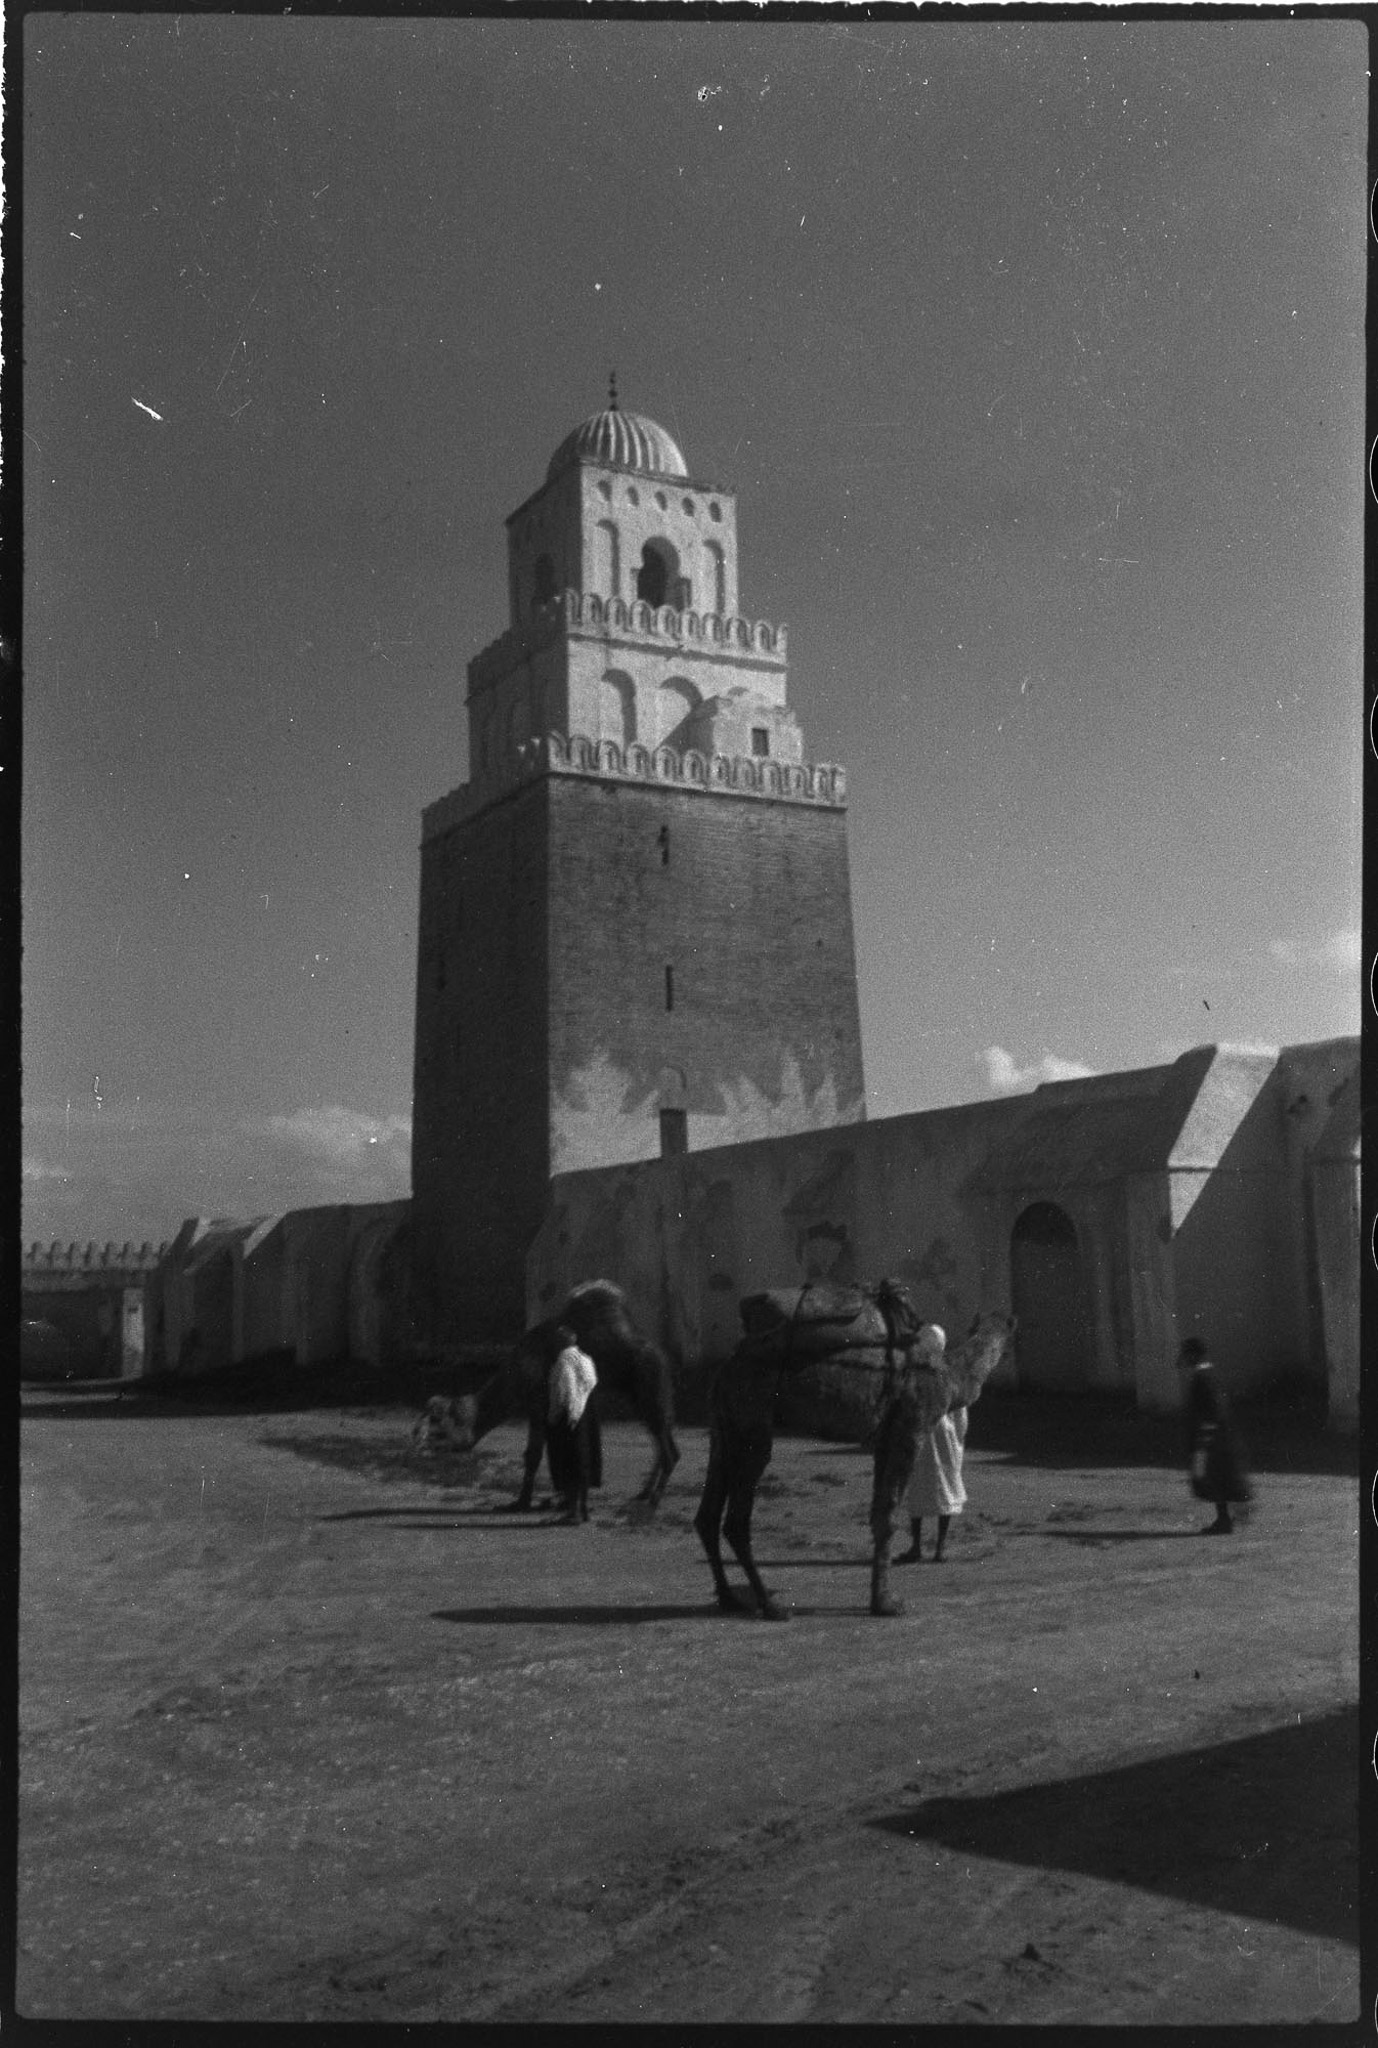 Photo by Peter J. Weberof the Minaret, Great Mosque of Kairouan, Tunisia